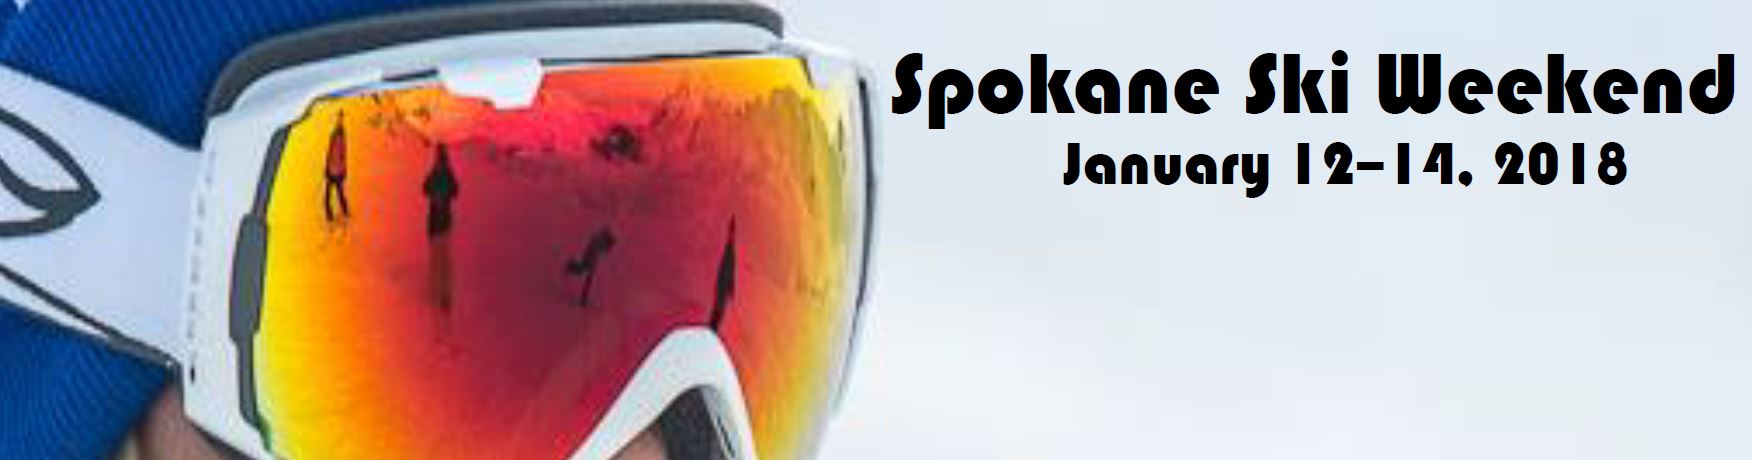 2018 Spokane Ski Weekend Logo